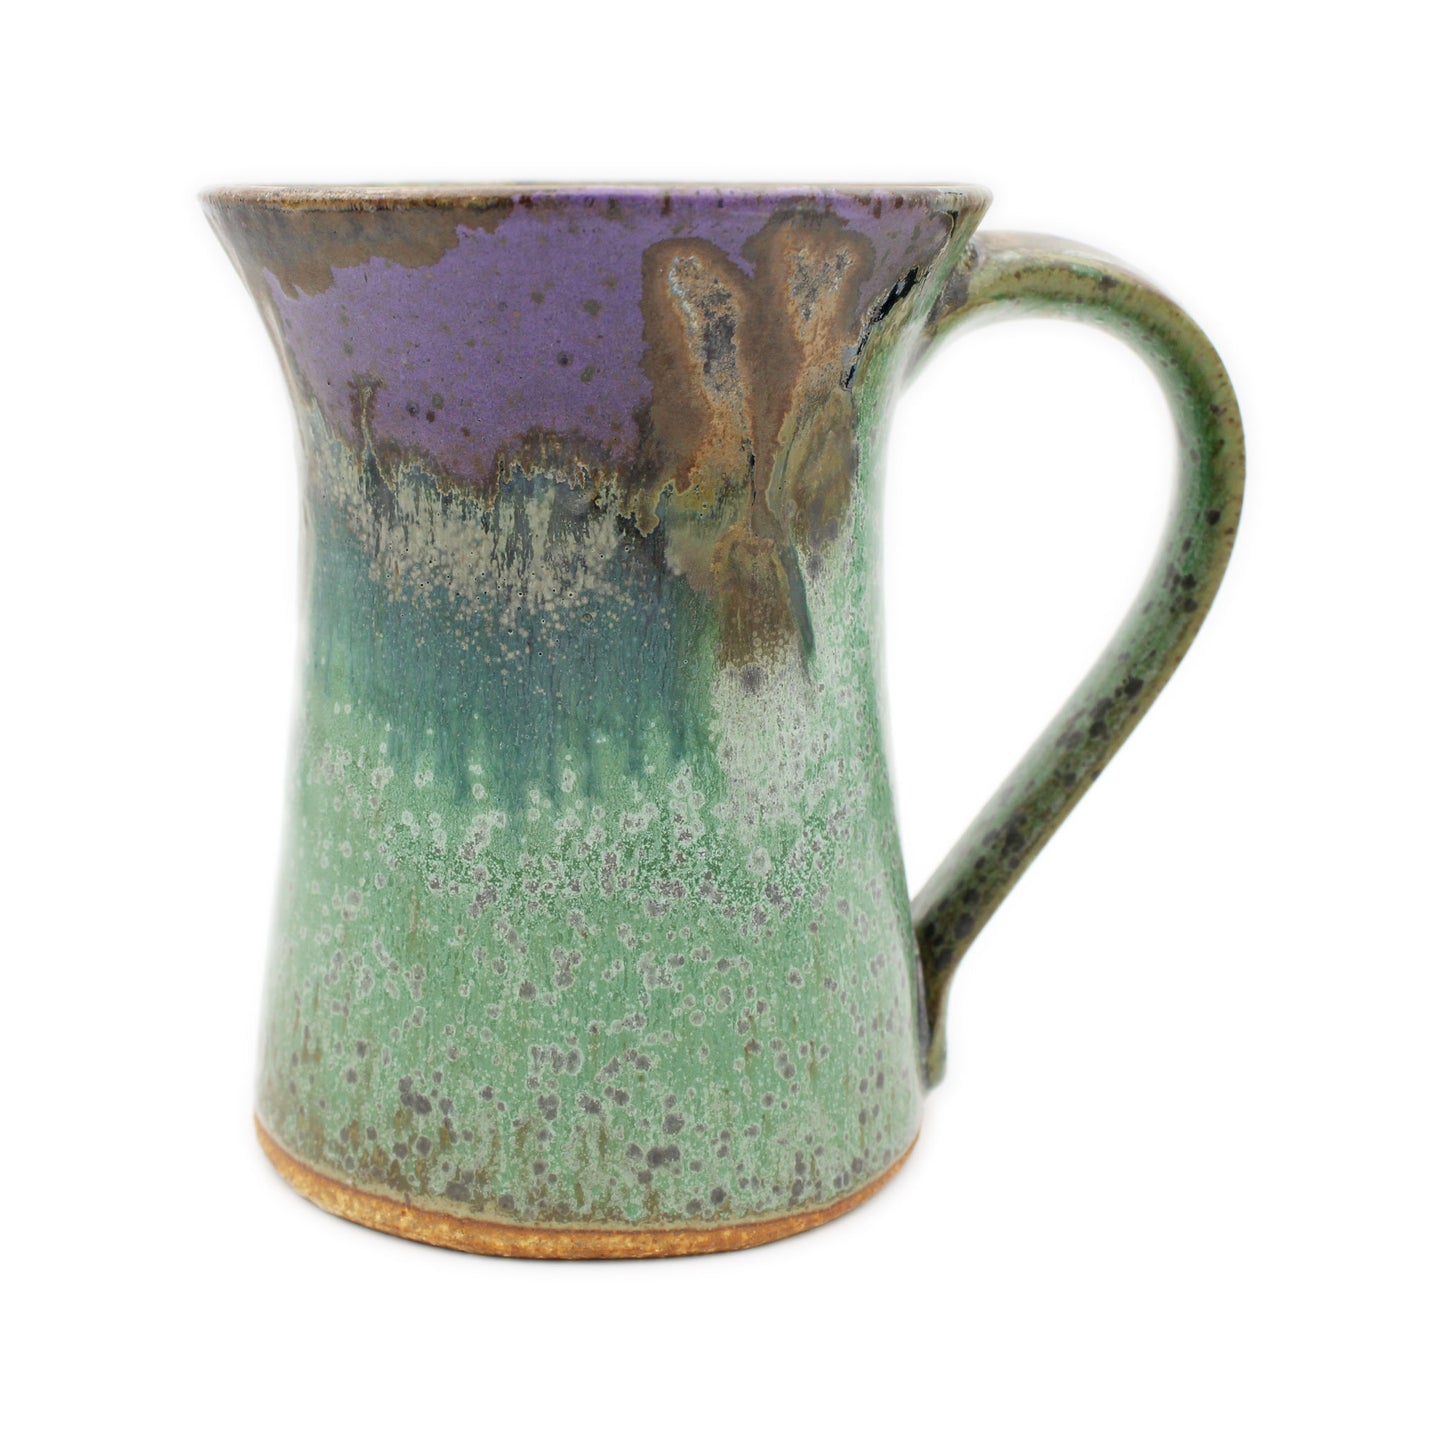 Hand-thrown Mug with Purple & Green Glaze